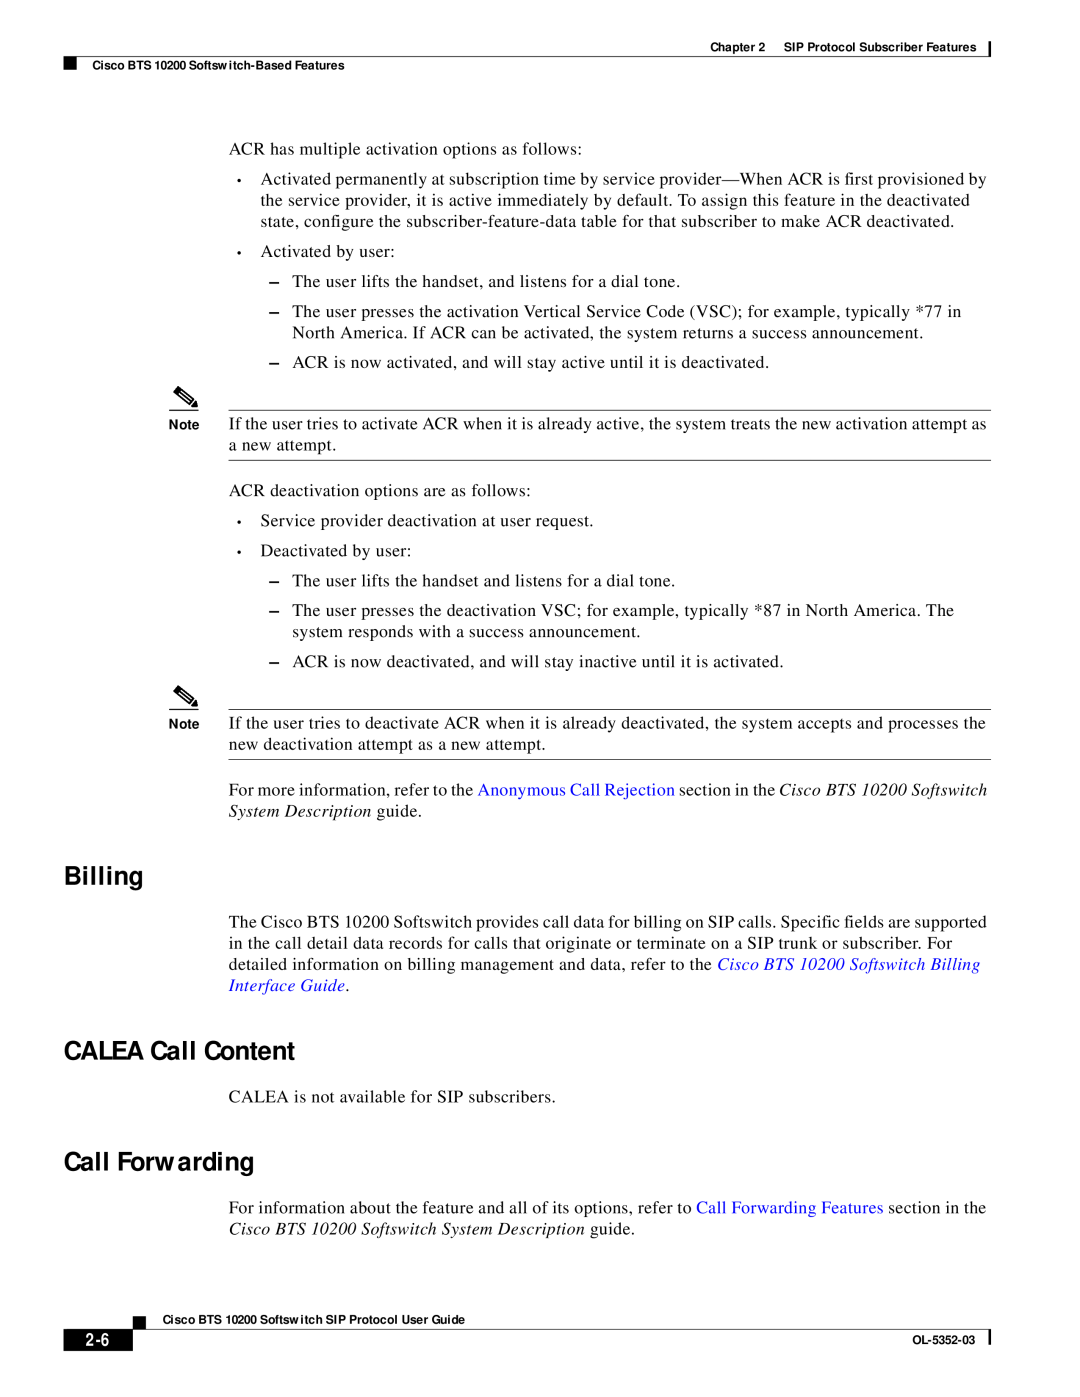 Cisco Systems BTS 10200 manual Billing, CALEA Call Content, Call Forwarding 